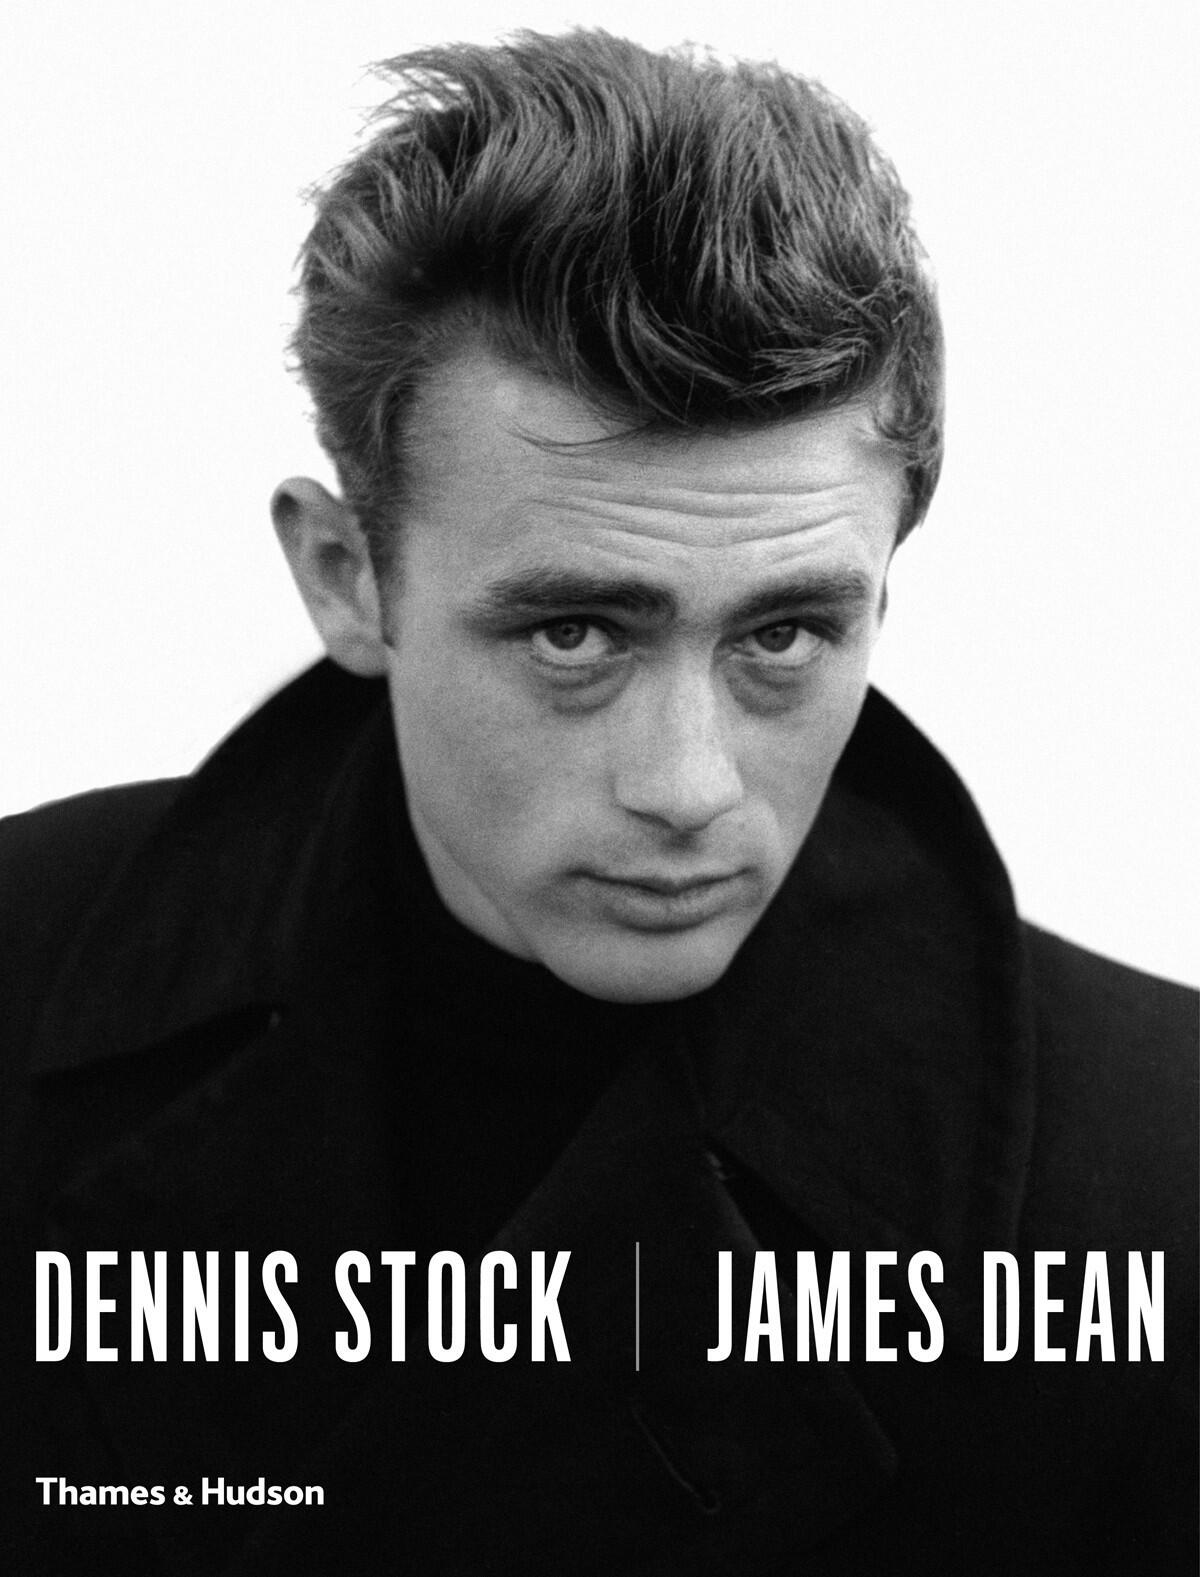 "Dennis Stock: James Dean"